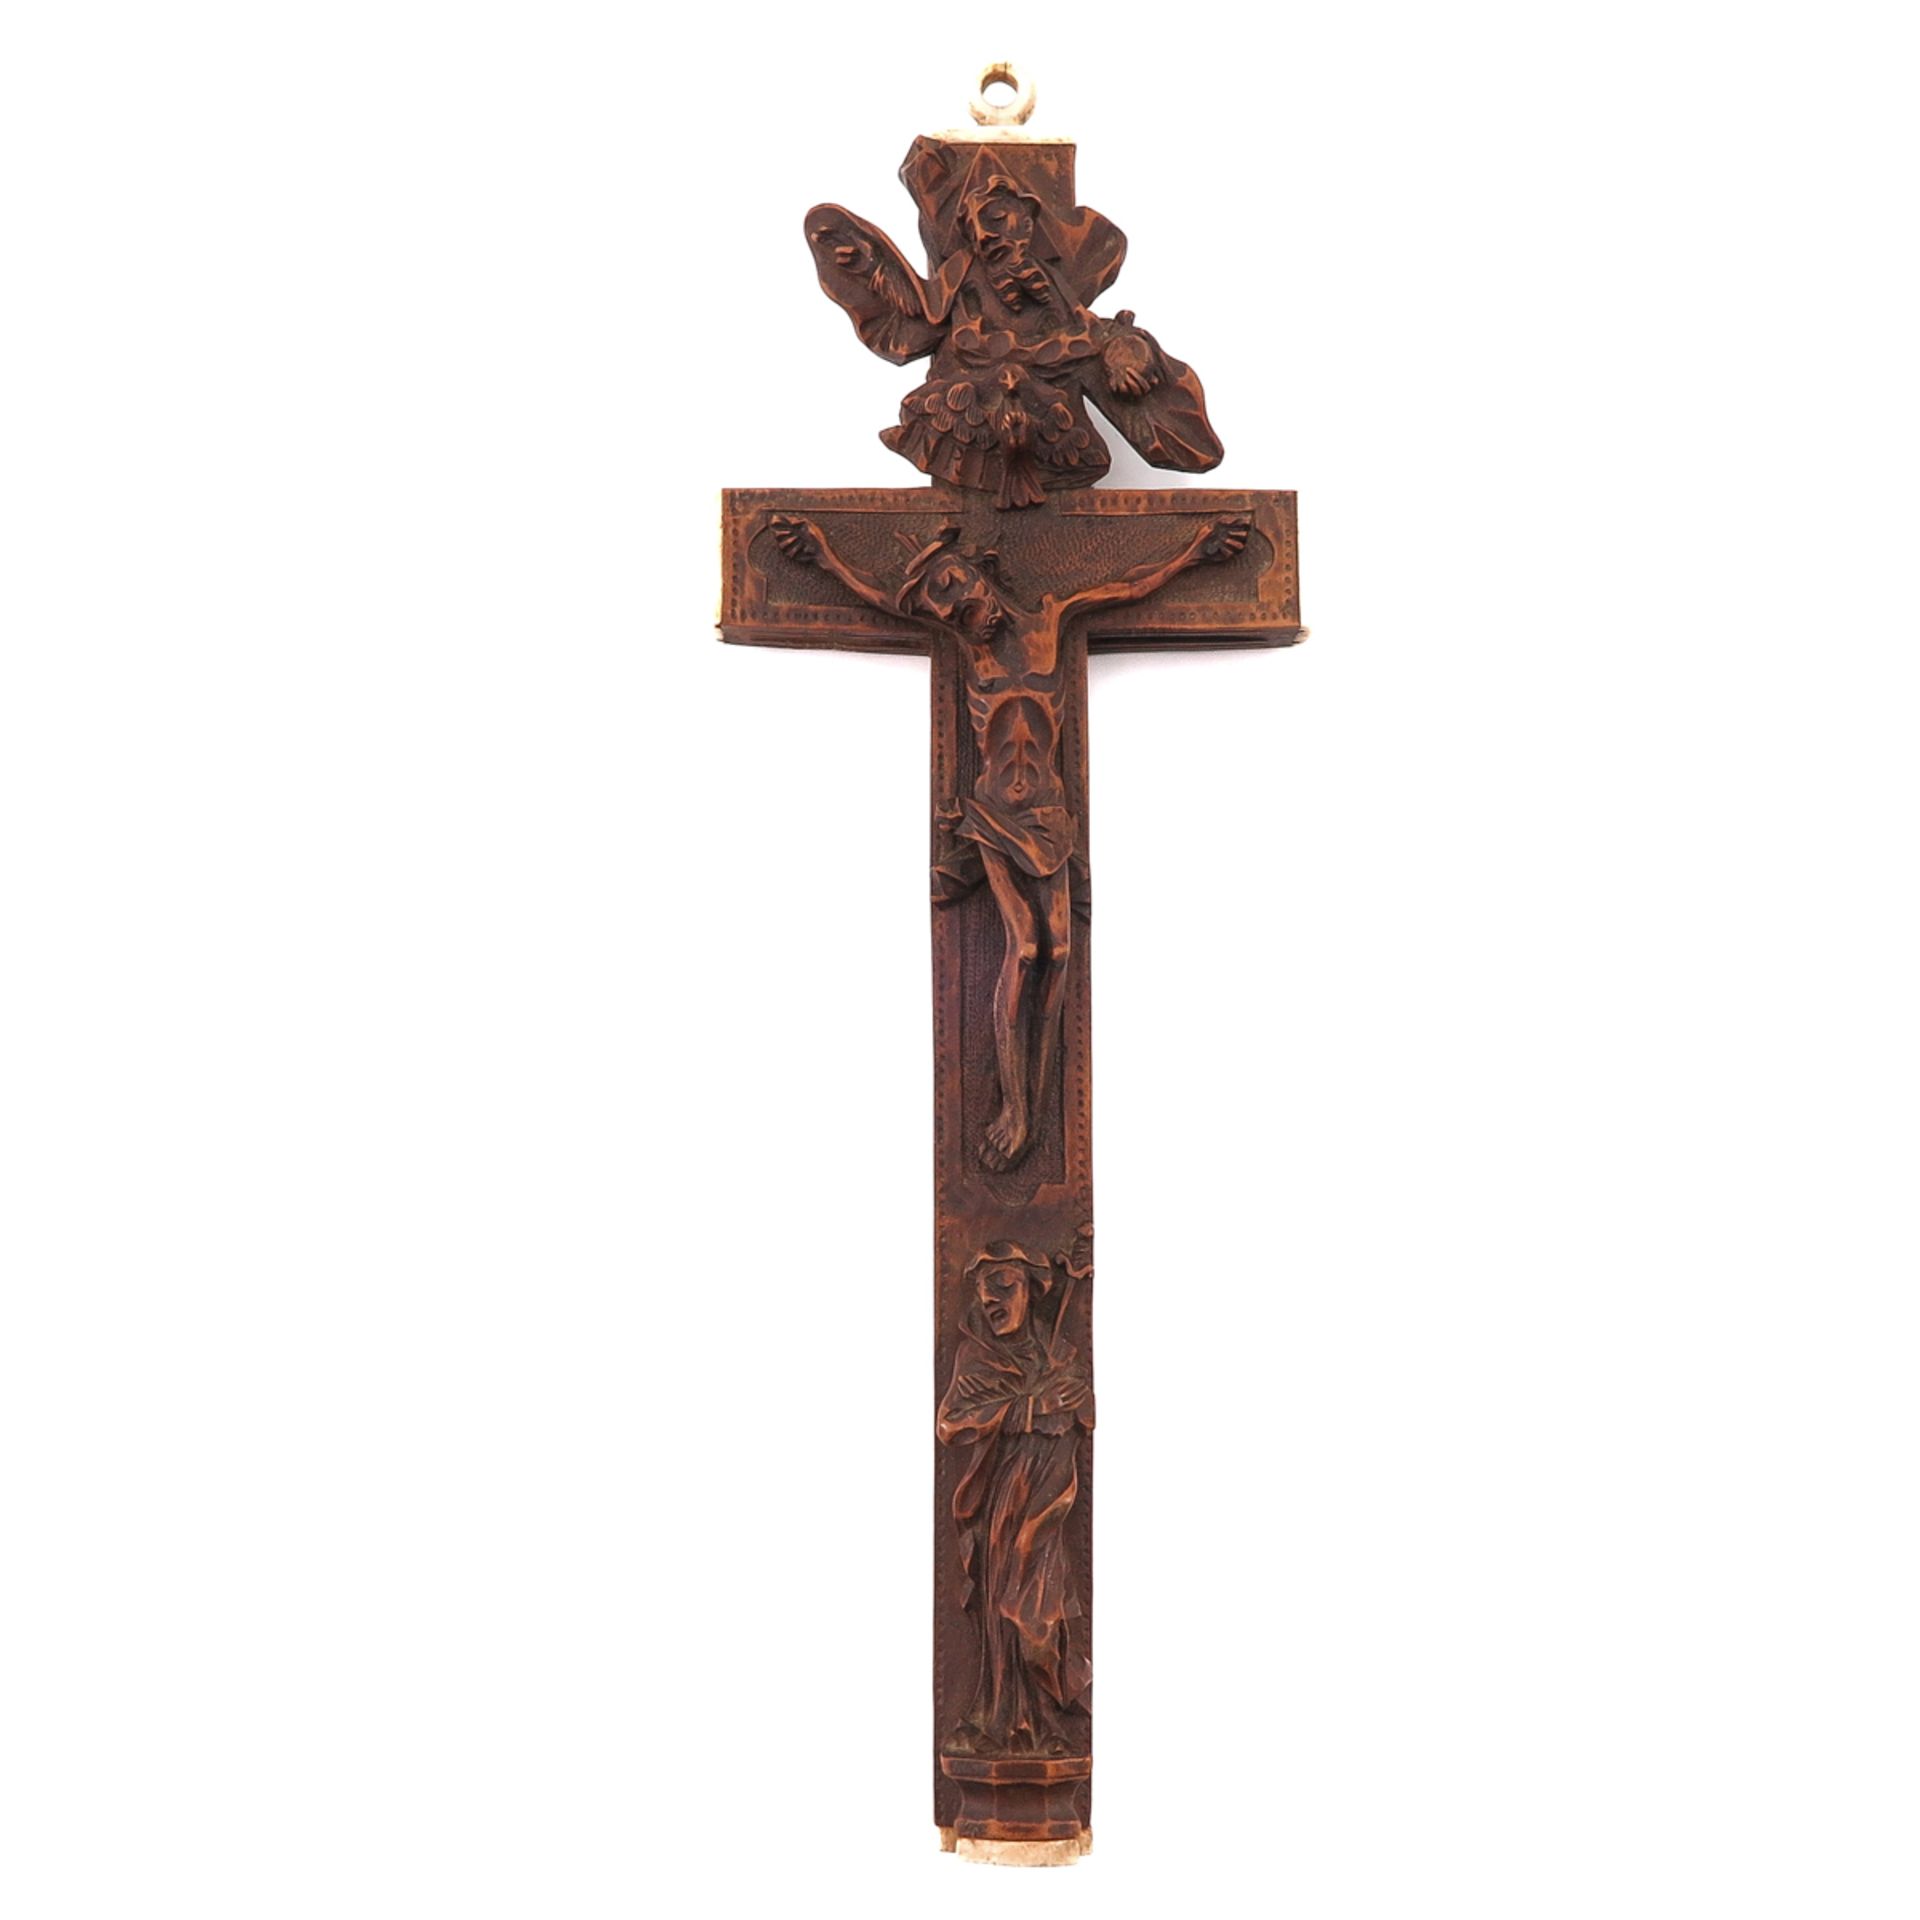 A 19th Century Relic Cross